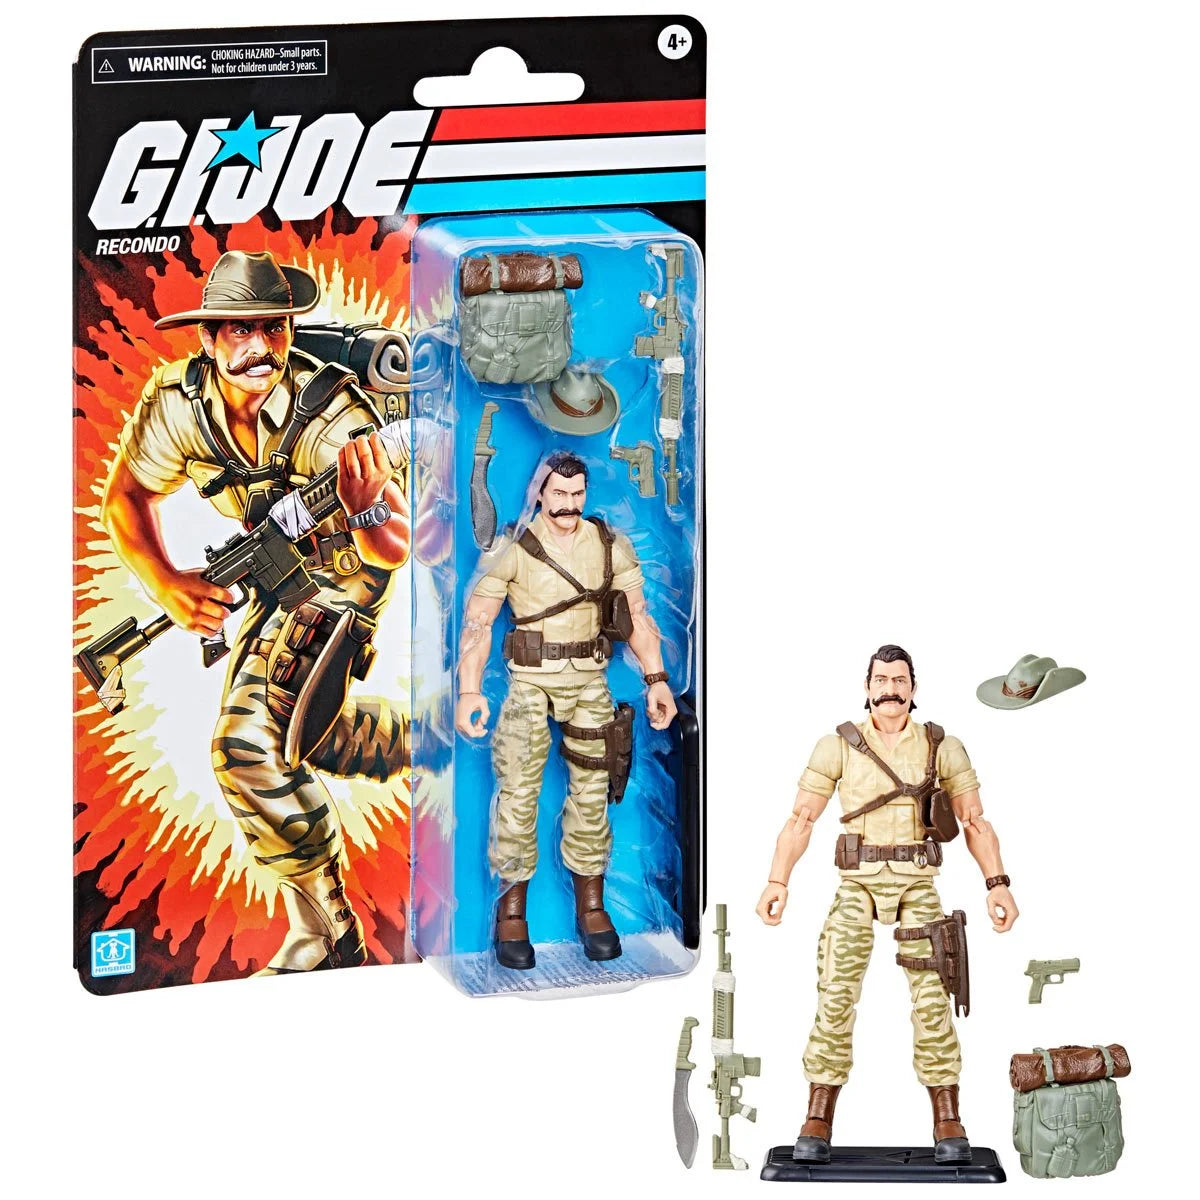 G.I. Joe Classified Series Retro Cardback Recondo Action Figure Toy